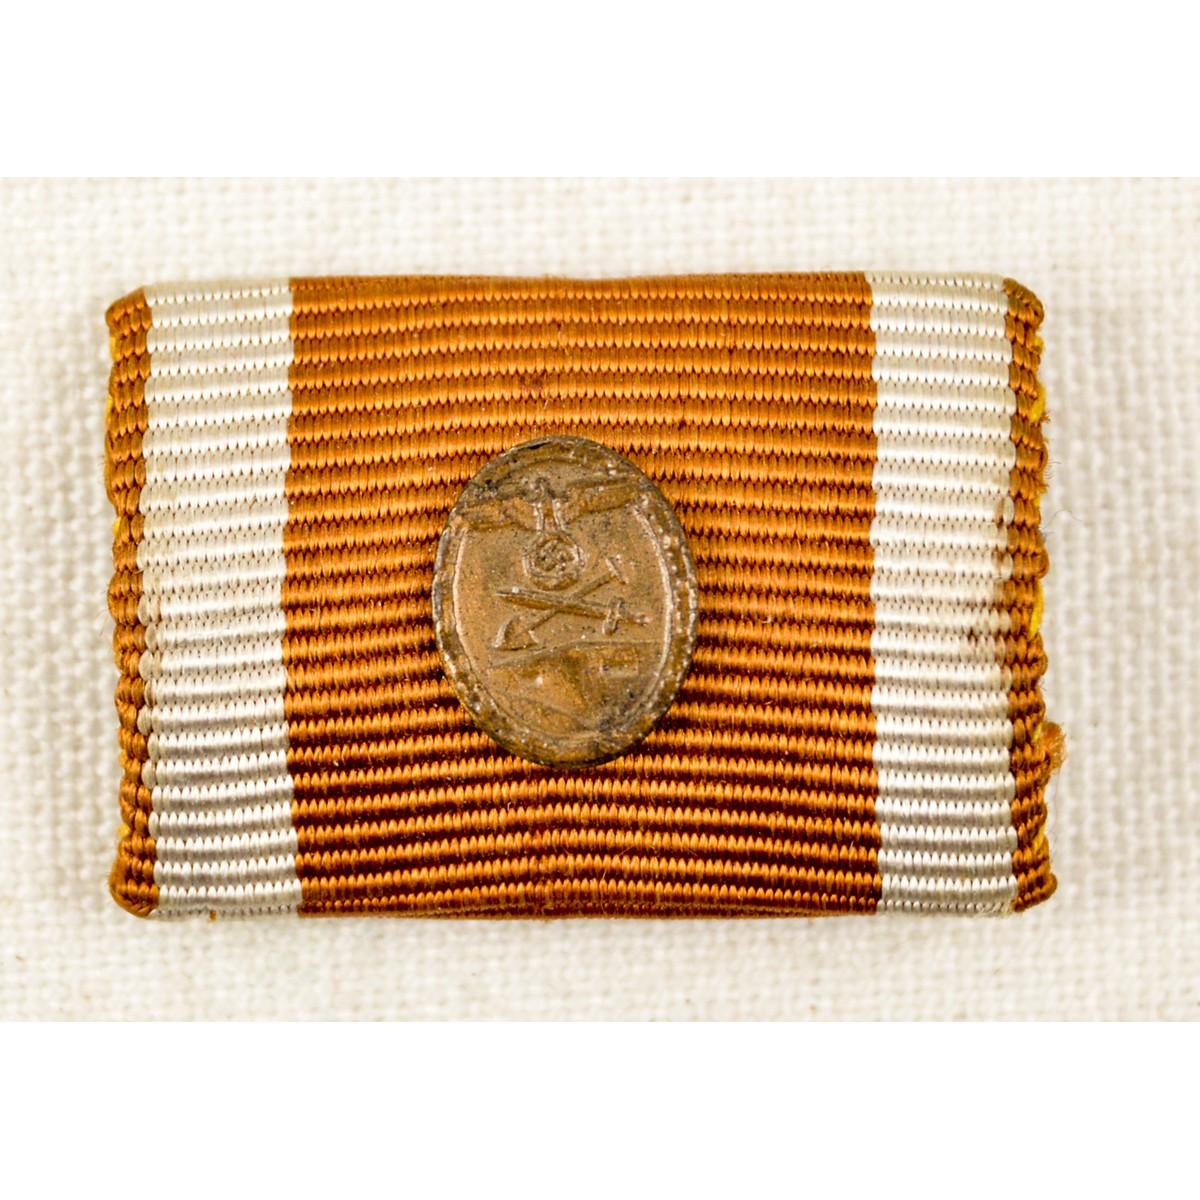 WWII German Cased Medal and Artwork